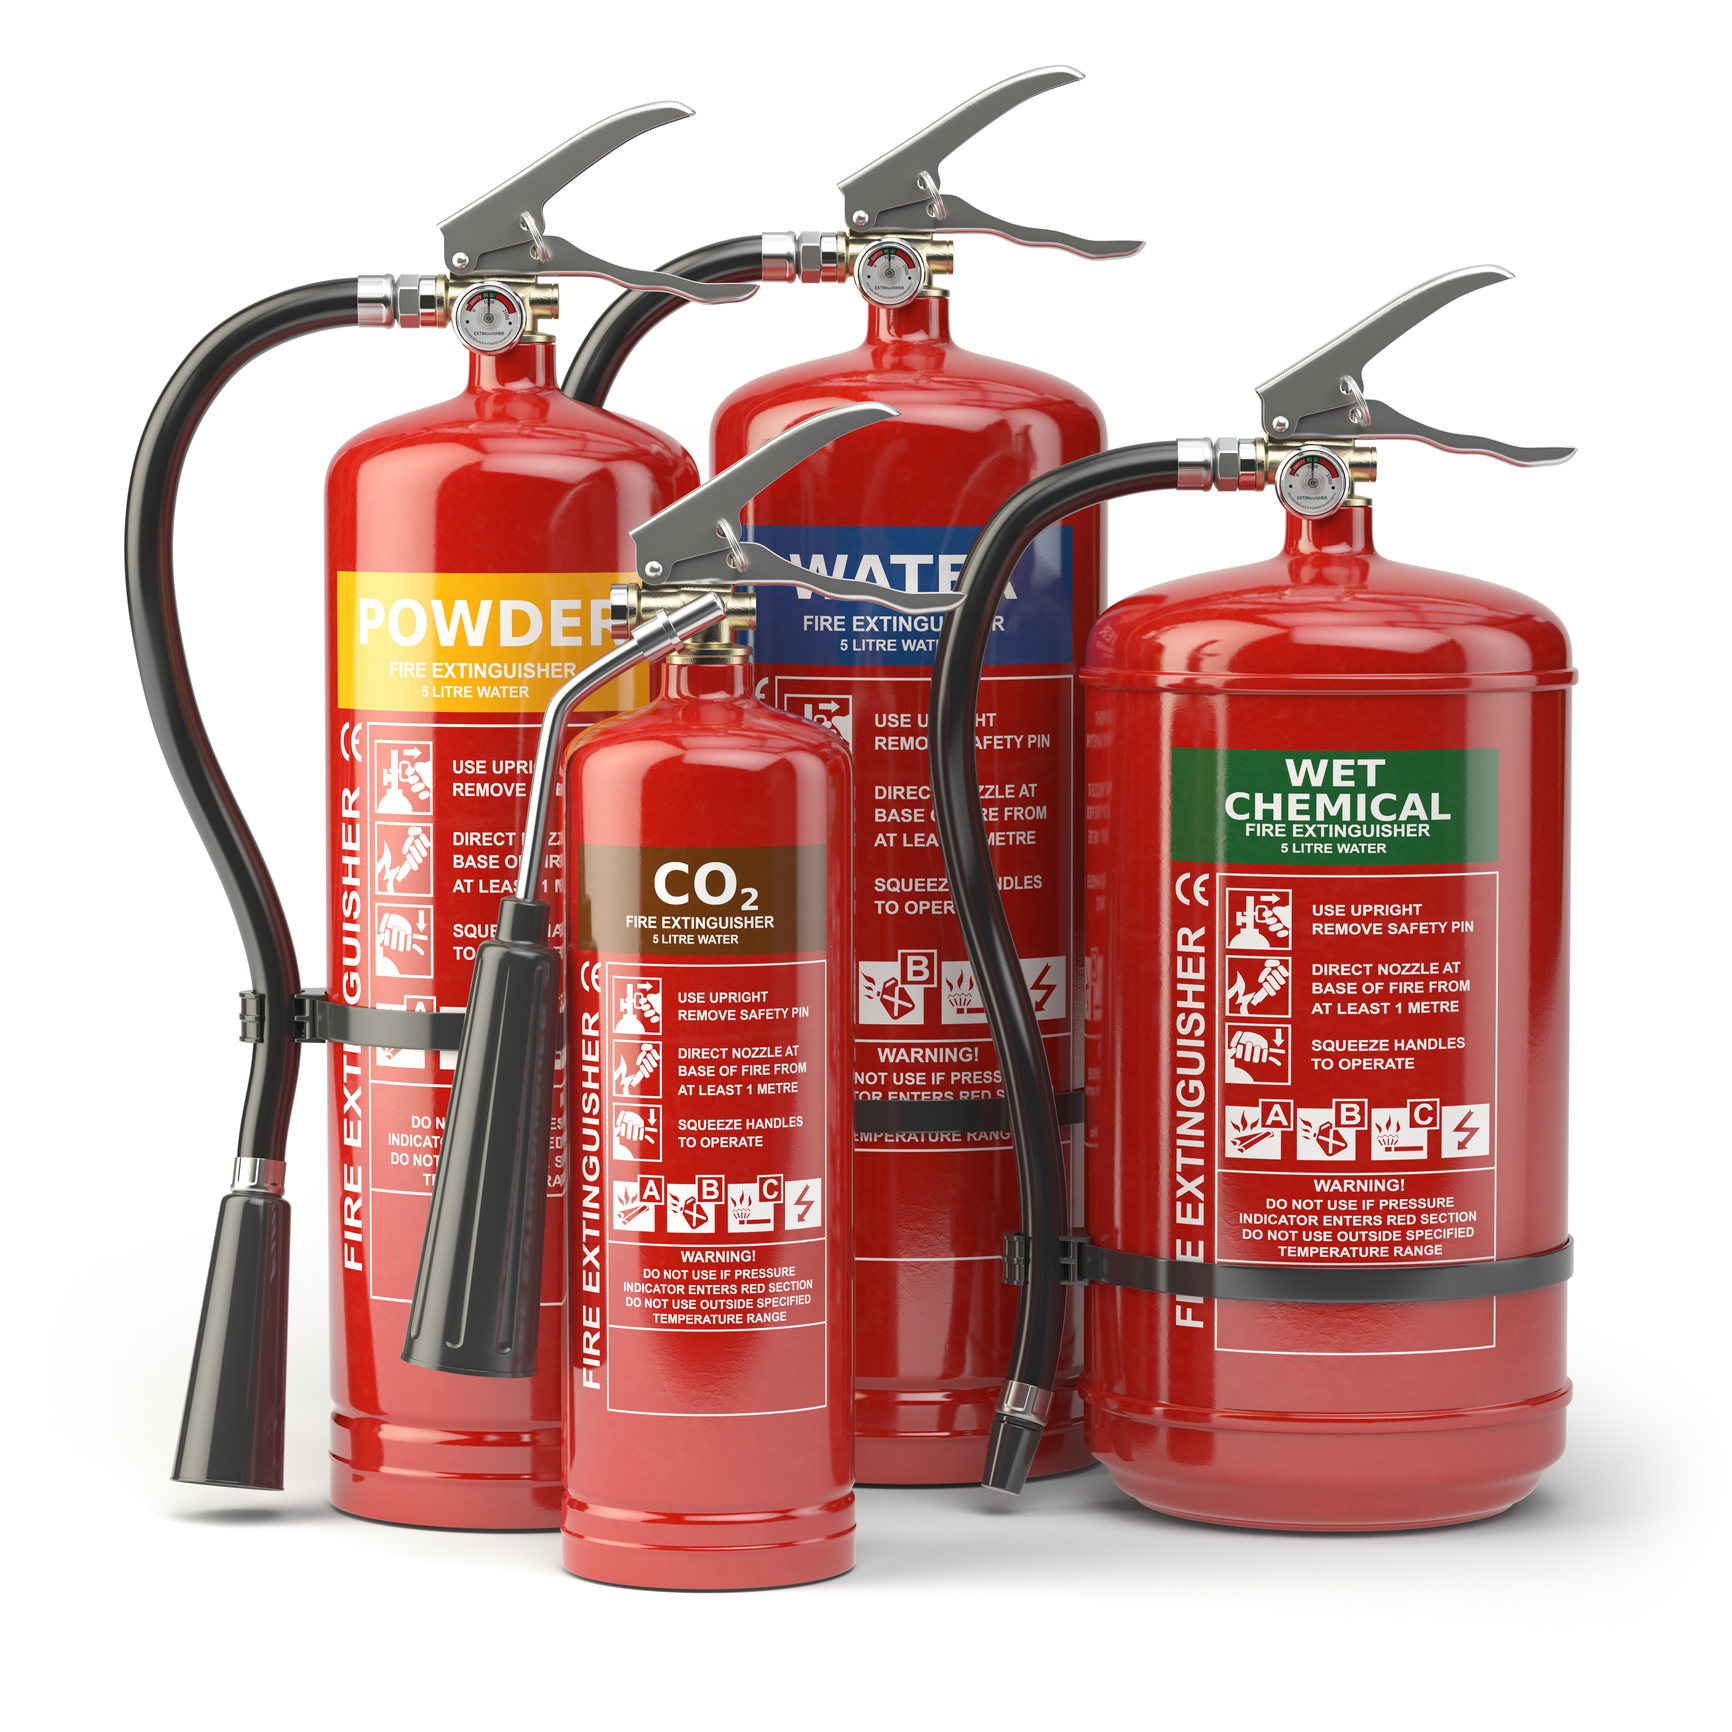 Fire extinguisher production line